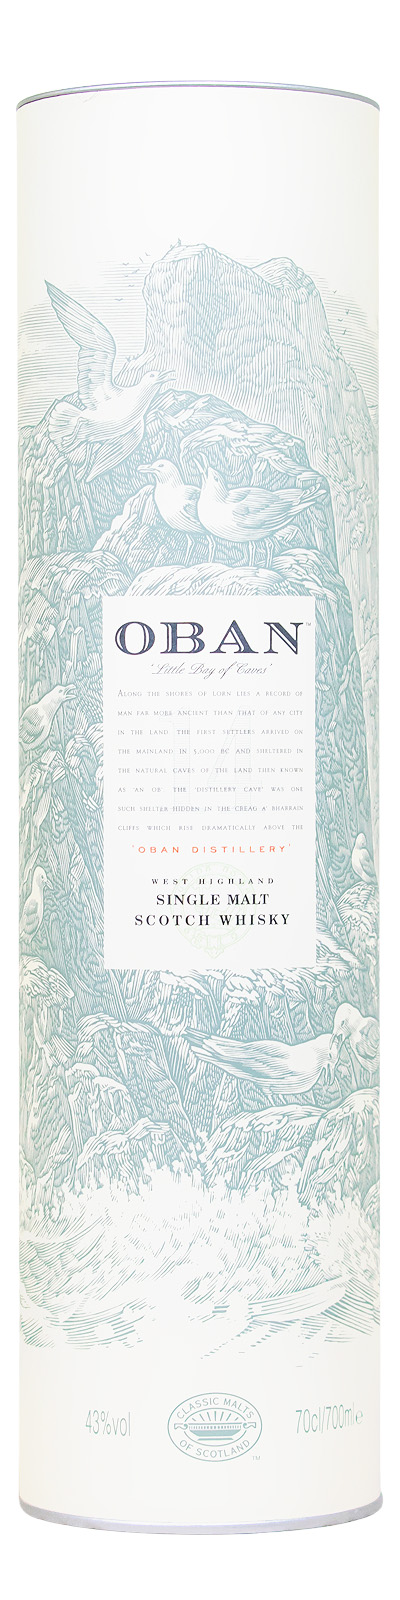 Oban 14 Jahre Highland Single Malt Scotch Whisky - 0,7L 43% vol